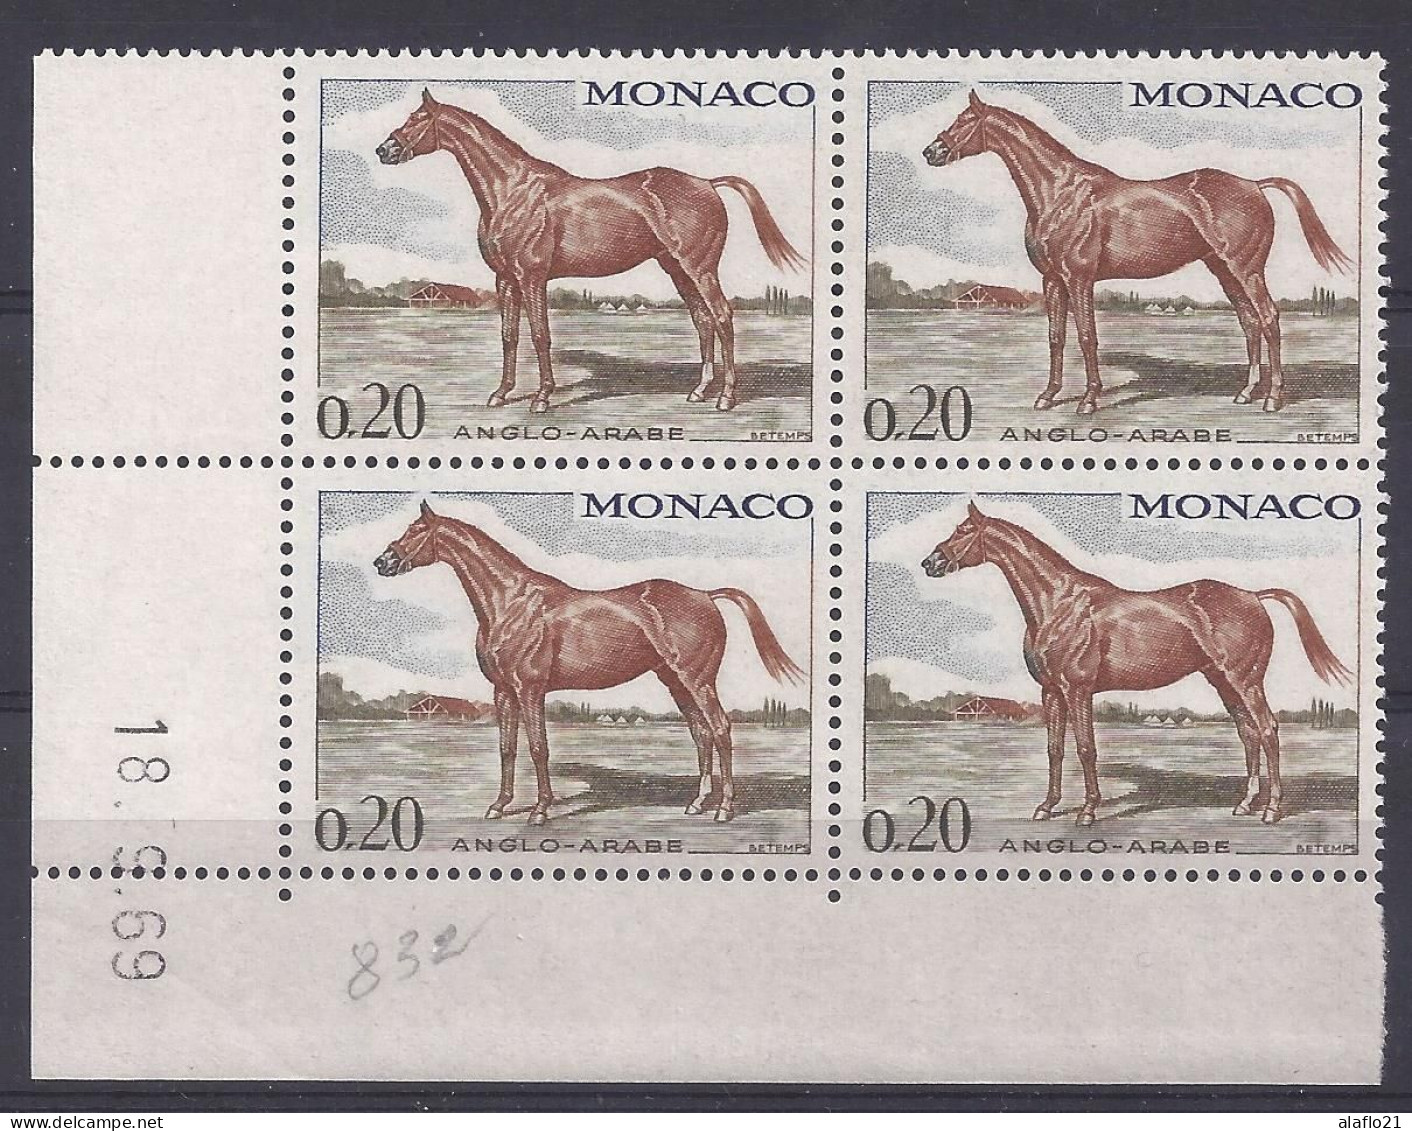 MONACO N° 832 - CHEVAL ANGLO-ARABE - BLOC De 4 COIN DATE - NEUF SANS CHARNIERE - 18/9/69 - Neufs